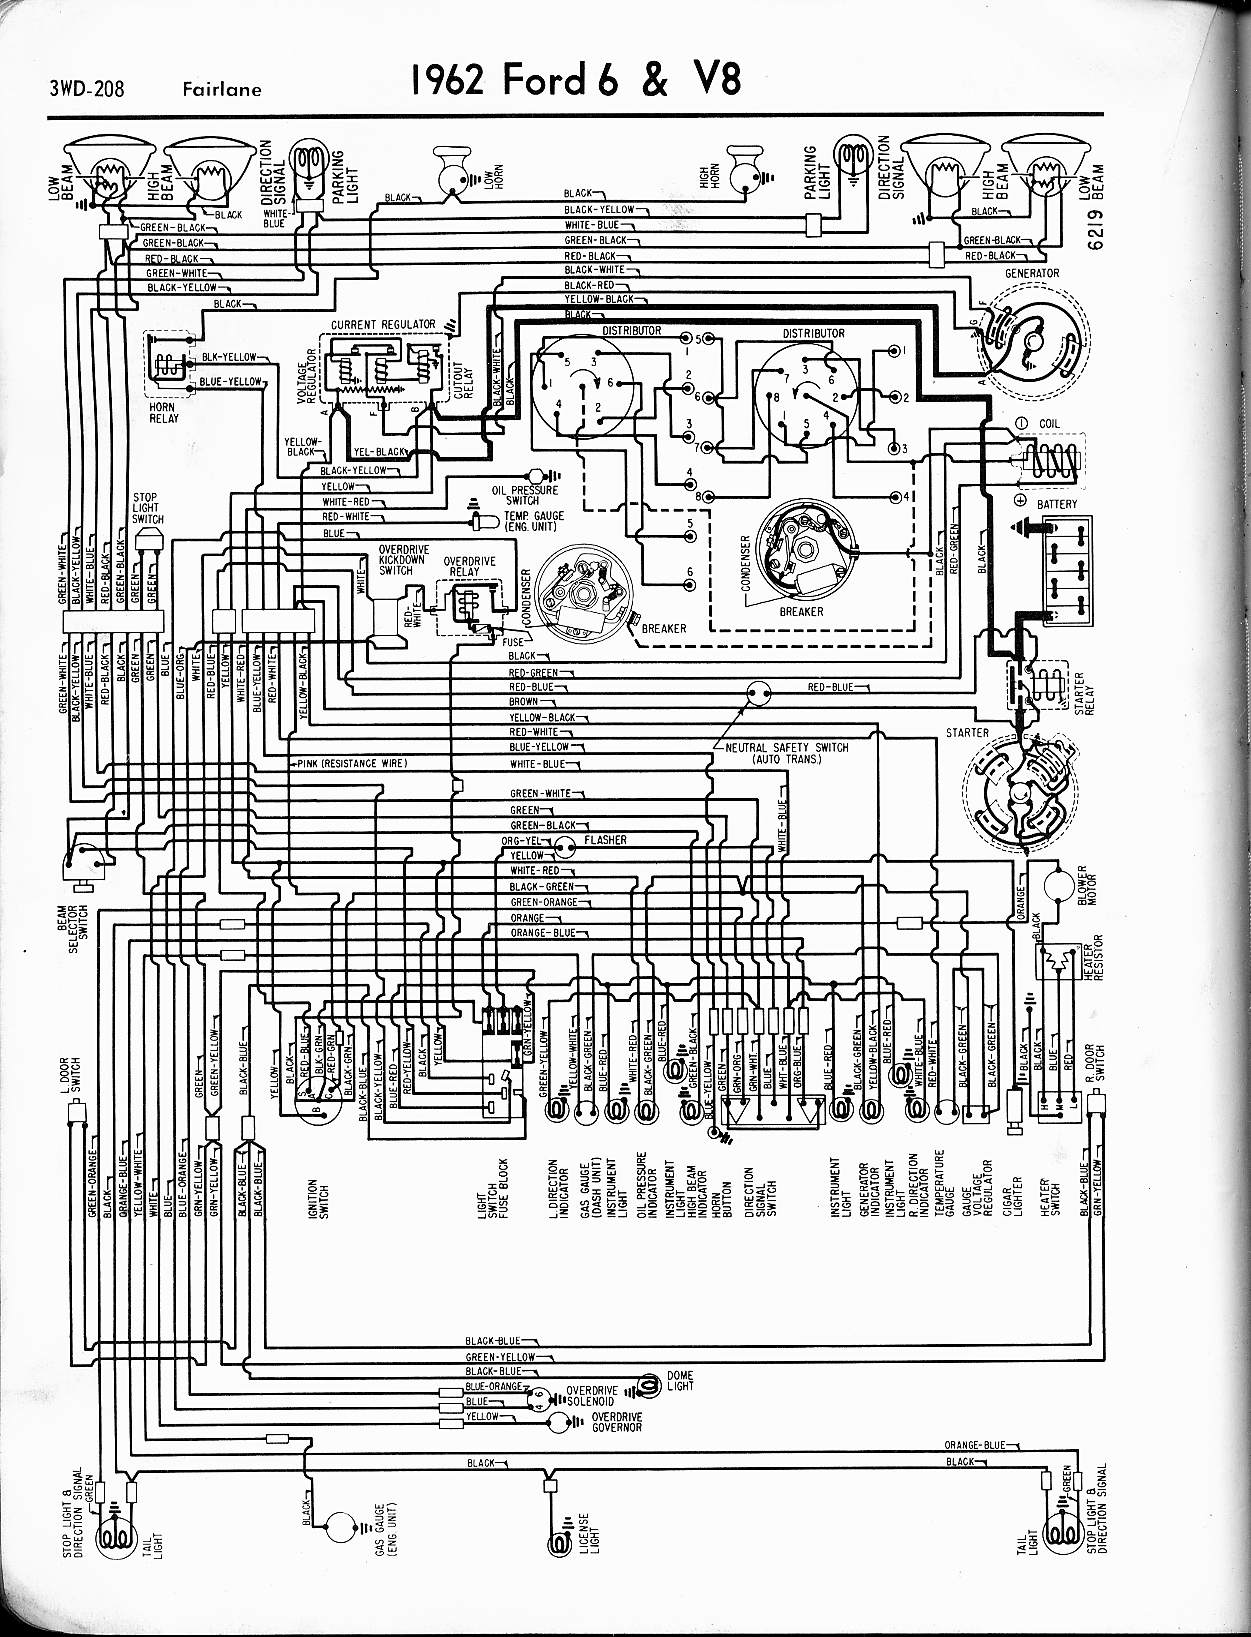 1965 Ford ranchero wiring diagram